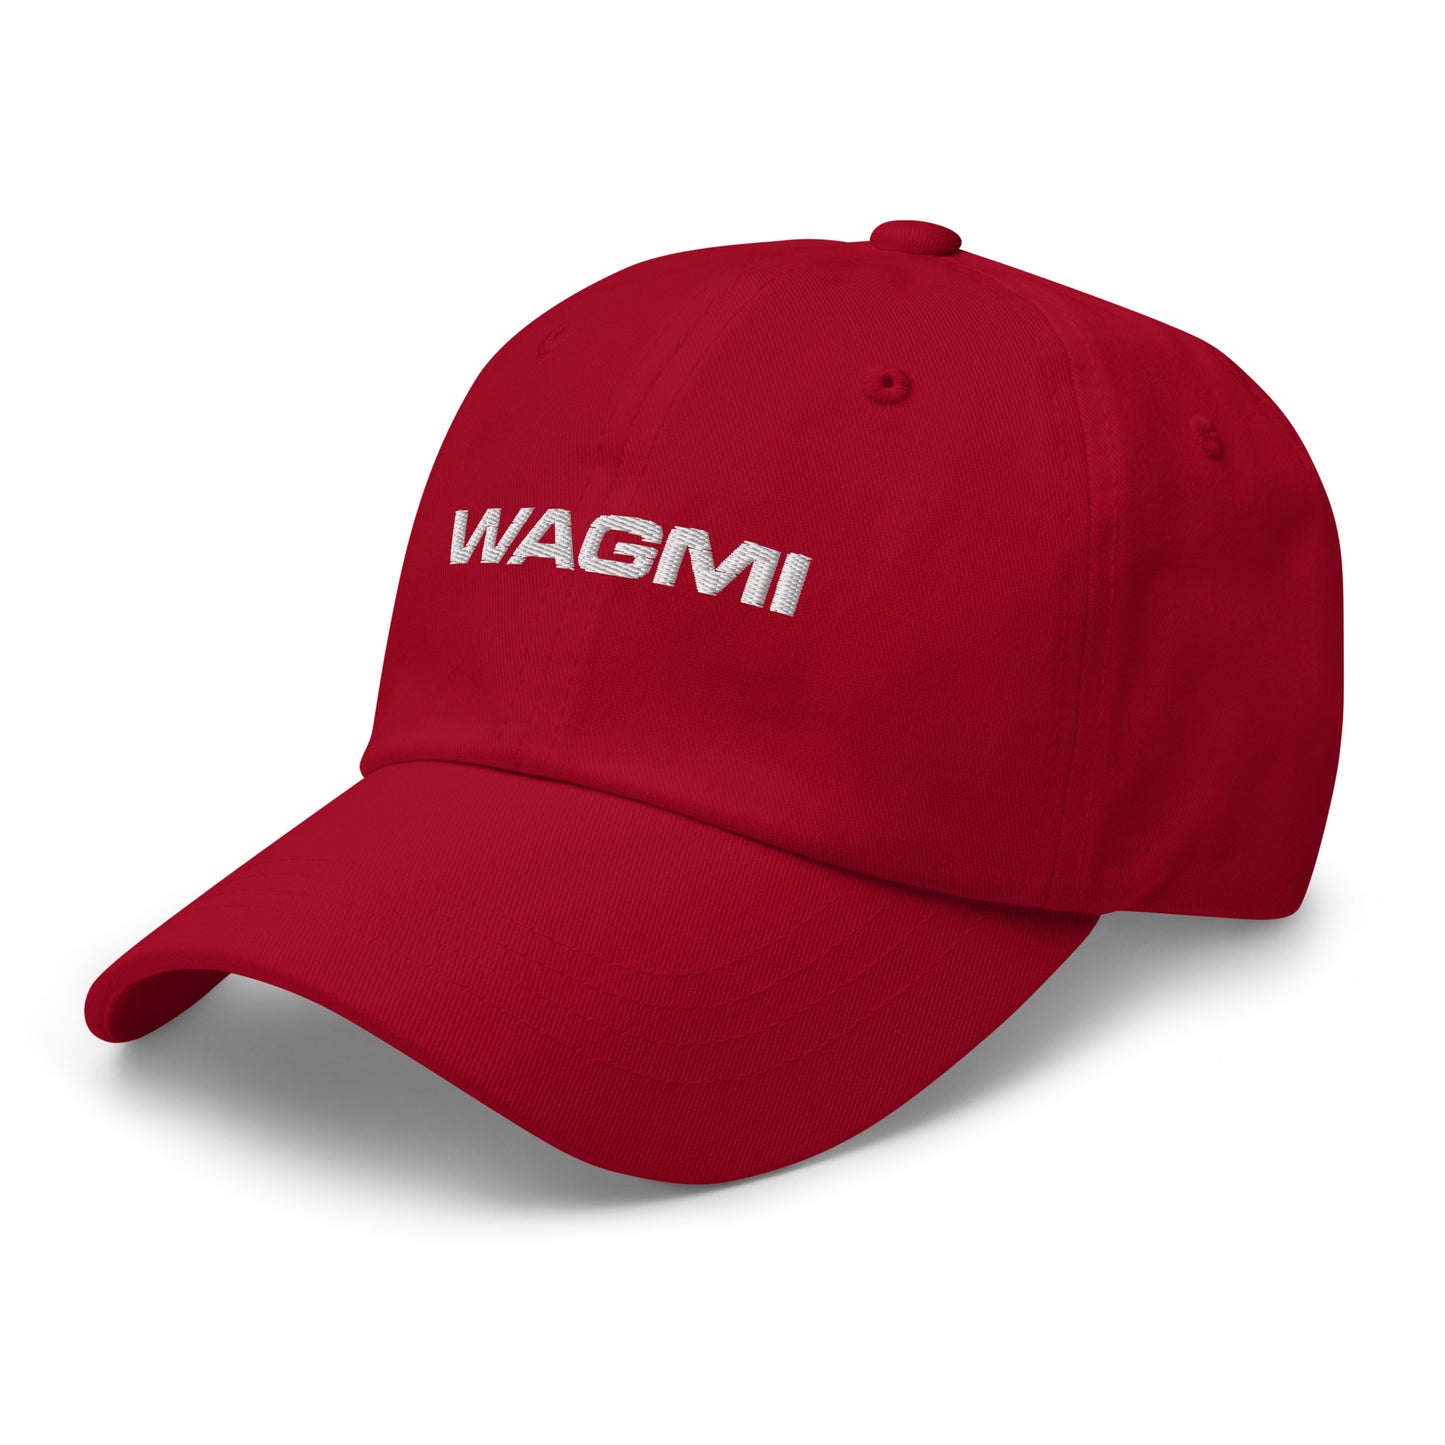 WAGMI Dad Hat